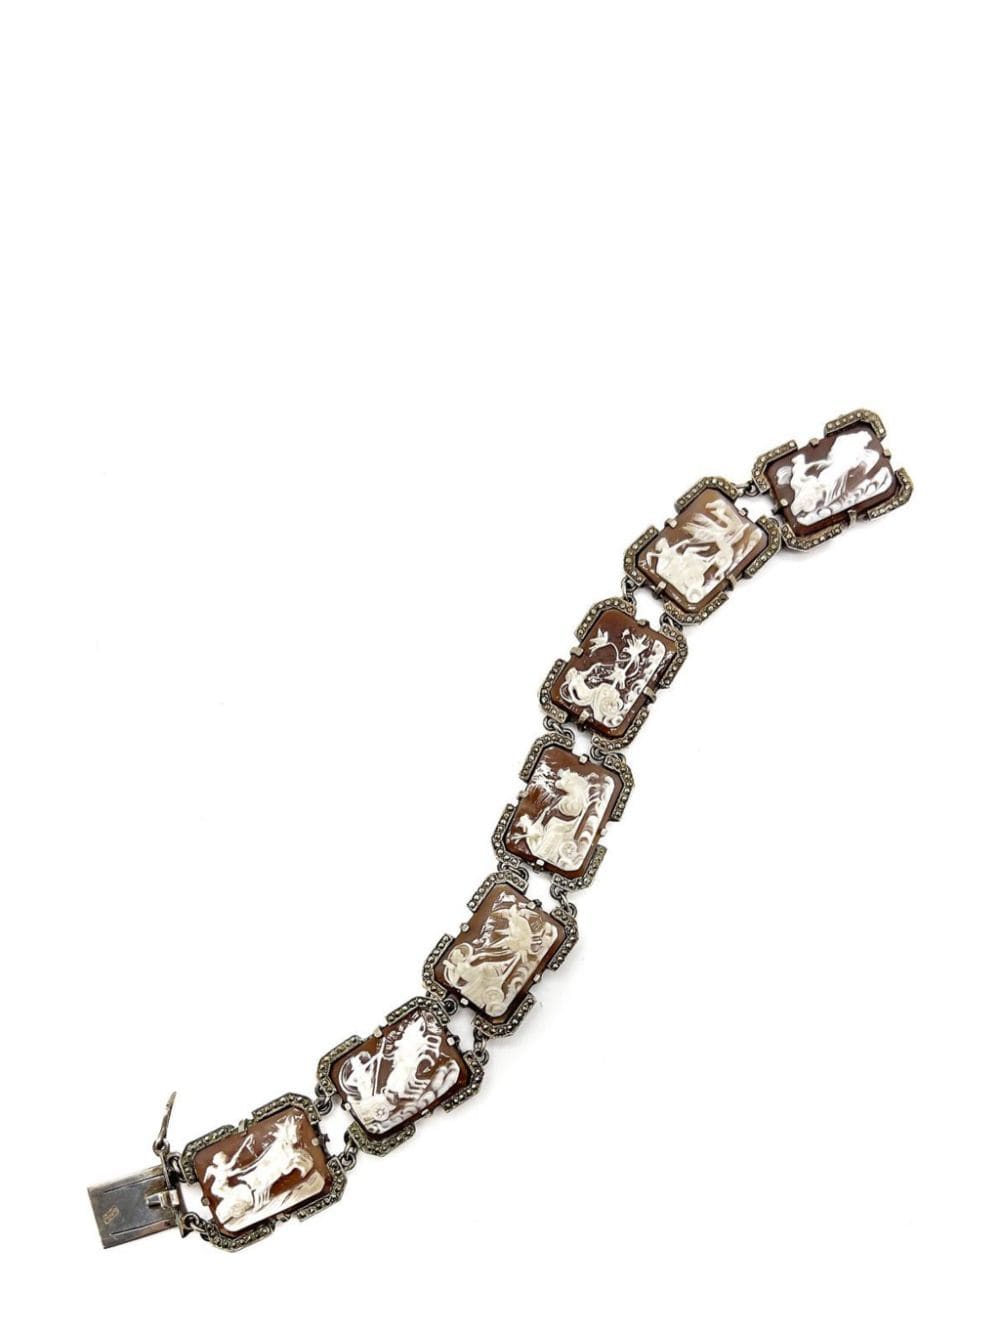 Jennifer Gibson Jewellery Antique Silver Shell Cameo Panel Bracelet 1930s - Bruin